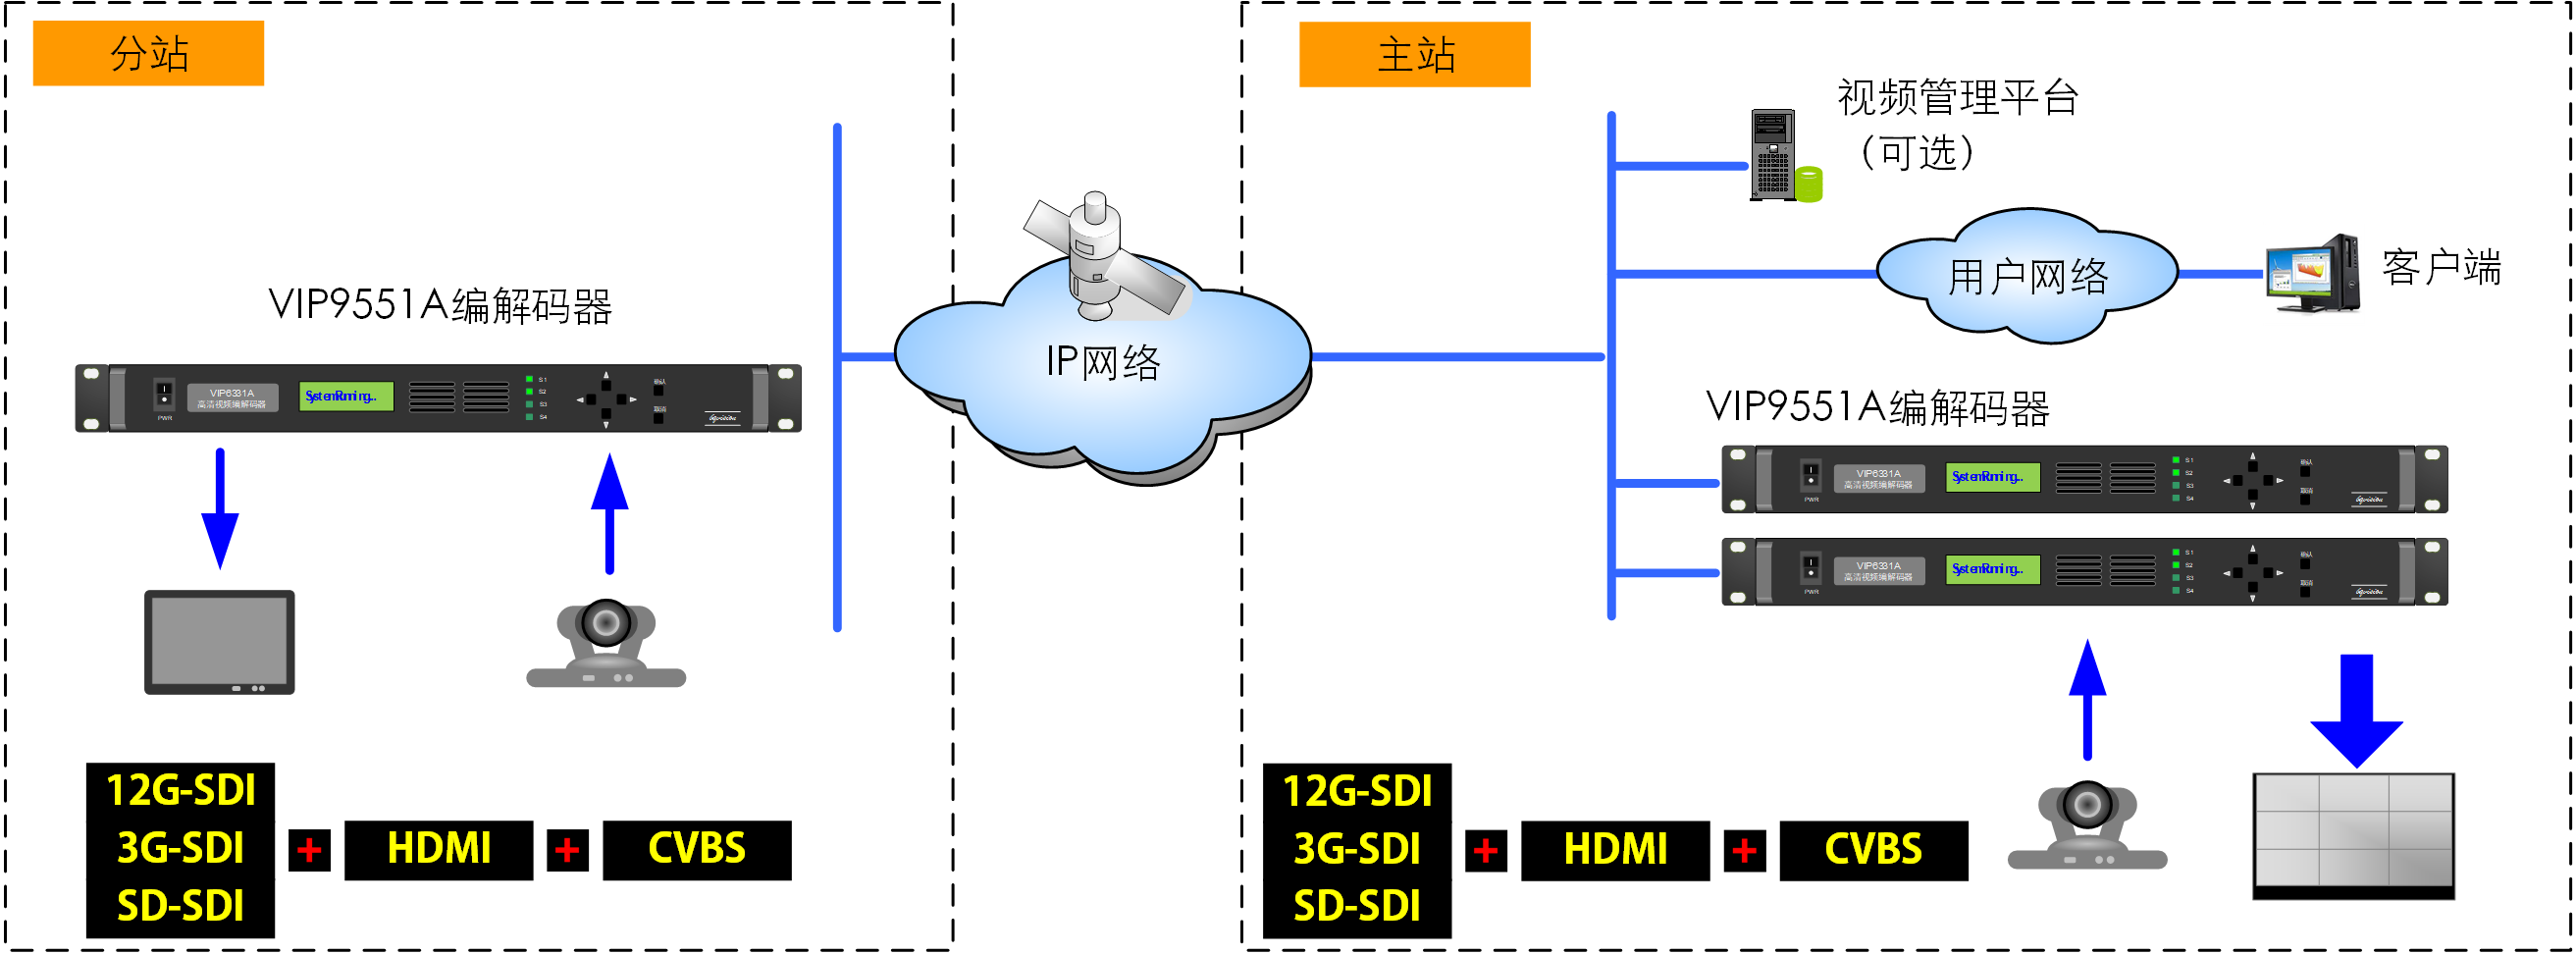 VIP9551系统图.png